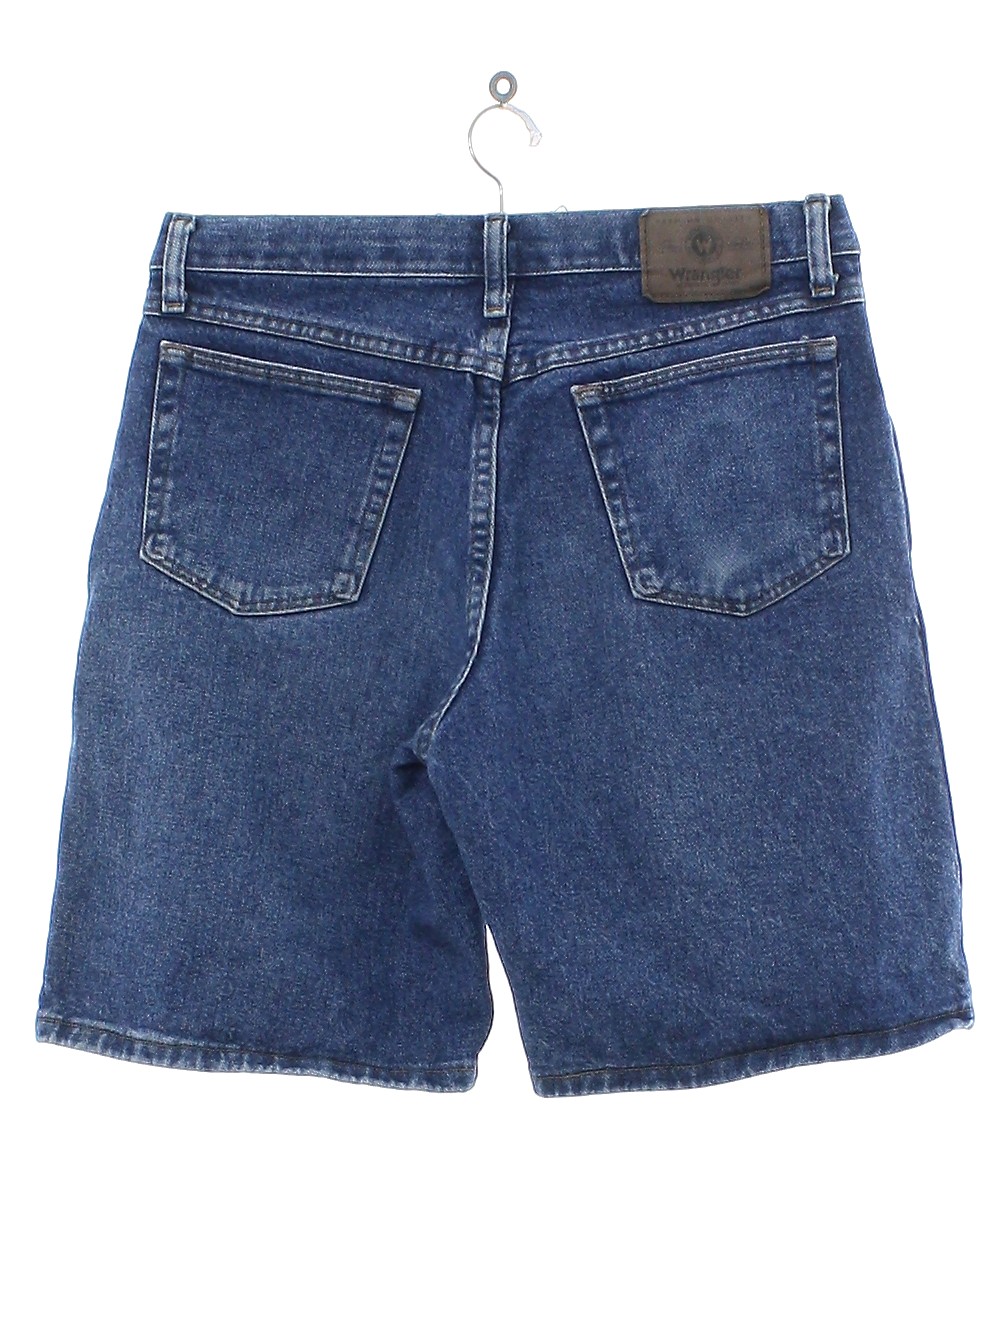 Retro Nineties Shorts: 90s -Wrangler- Mens slightly faded and worn blue ...